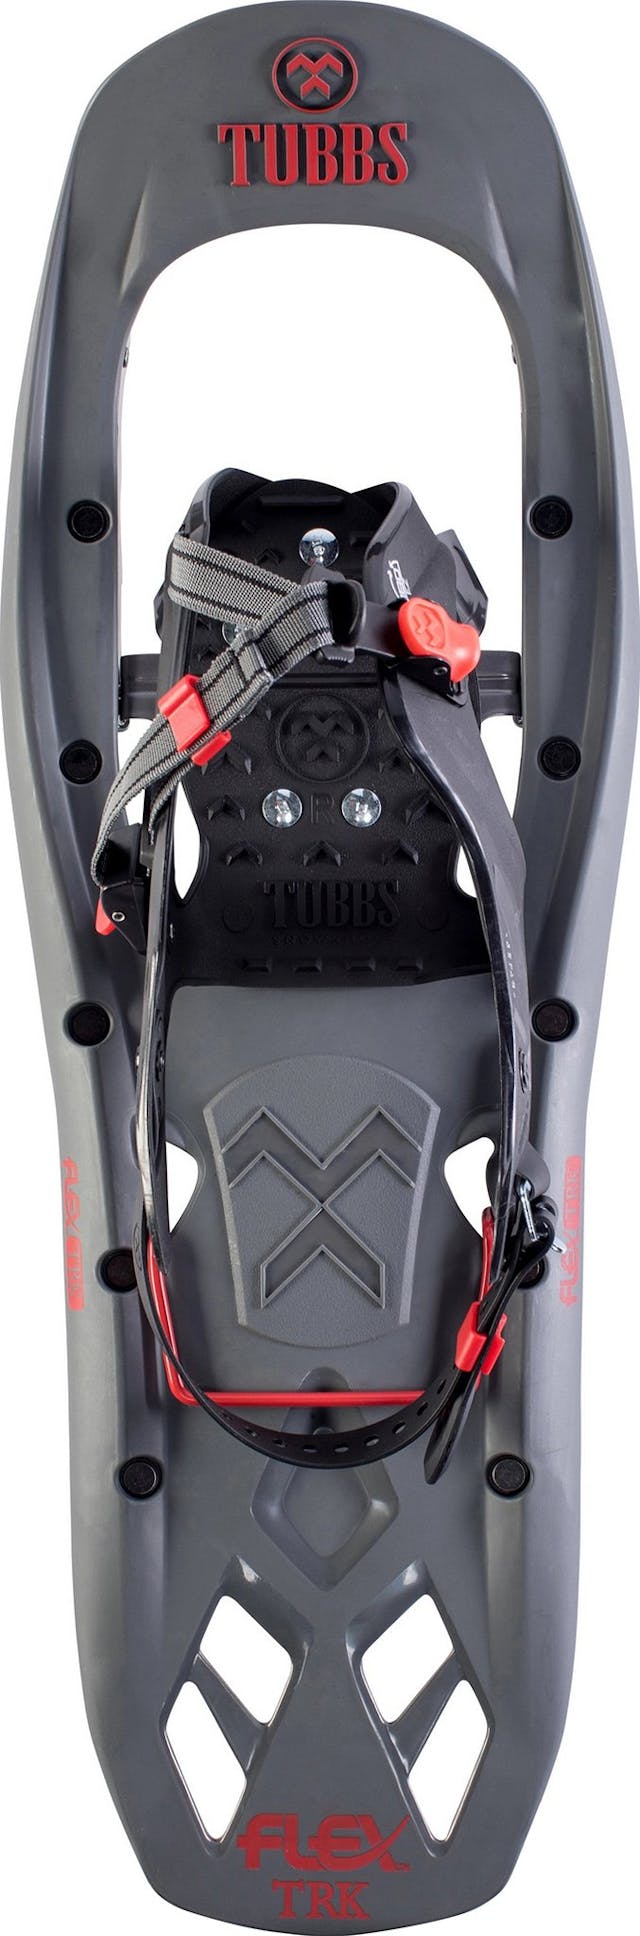 Product image for Flex TRK 24 In Snowshoes - Men's